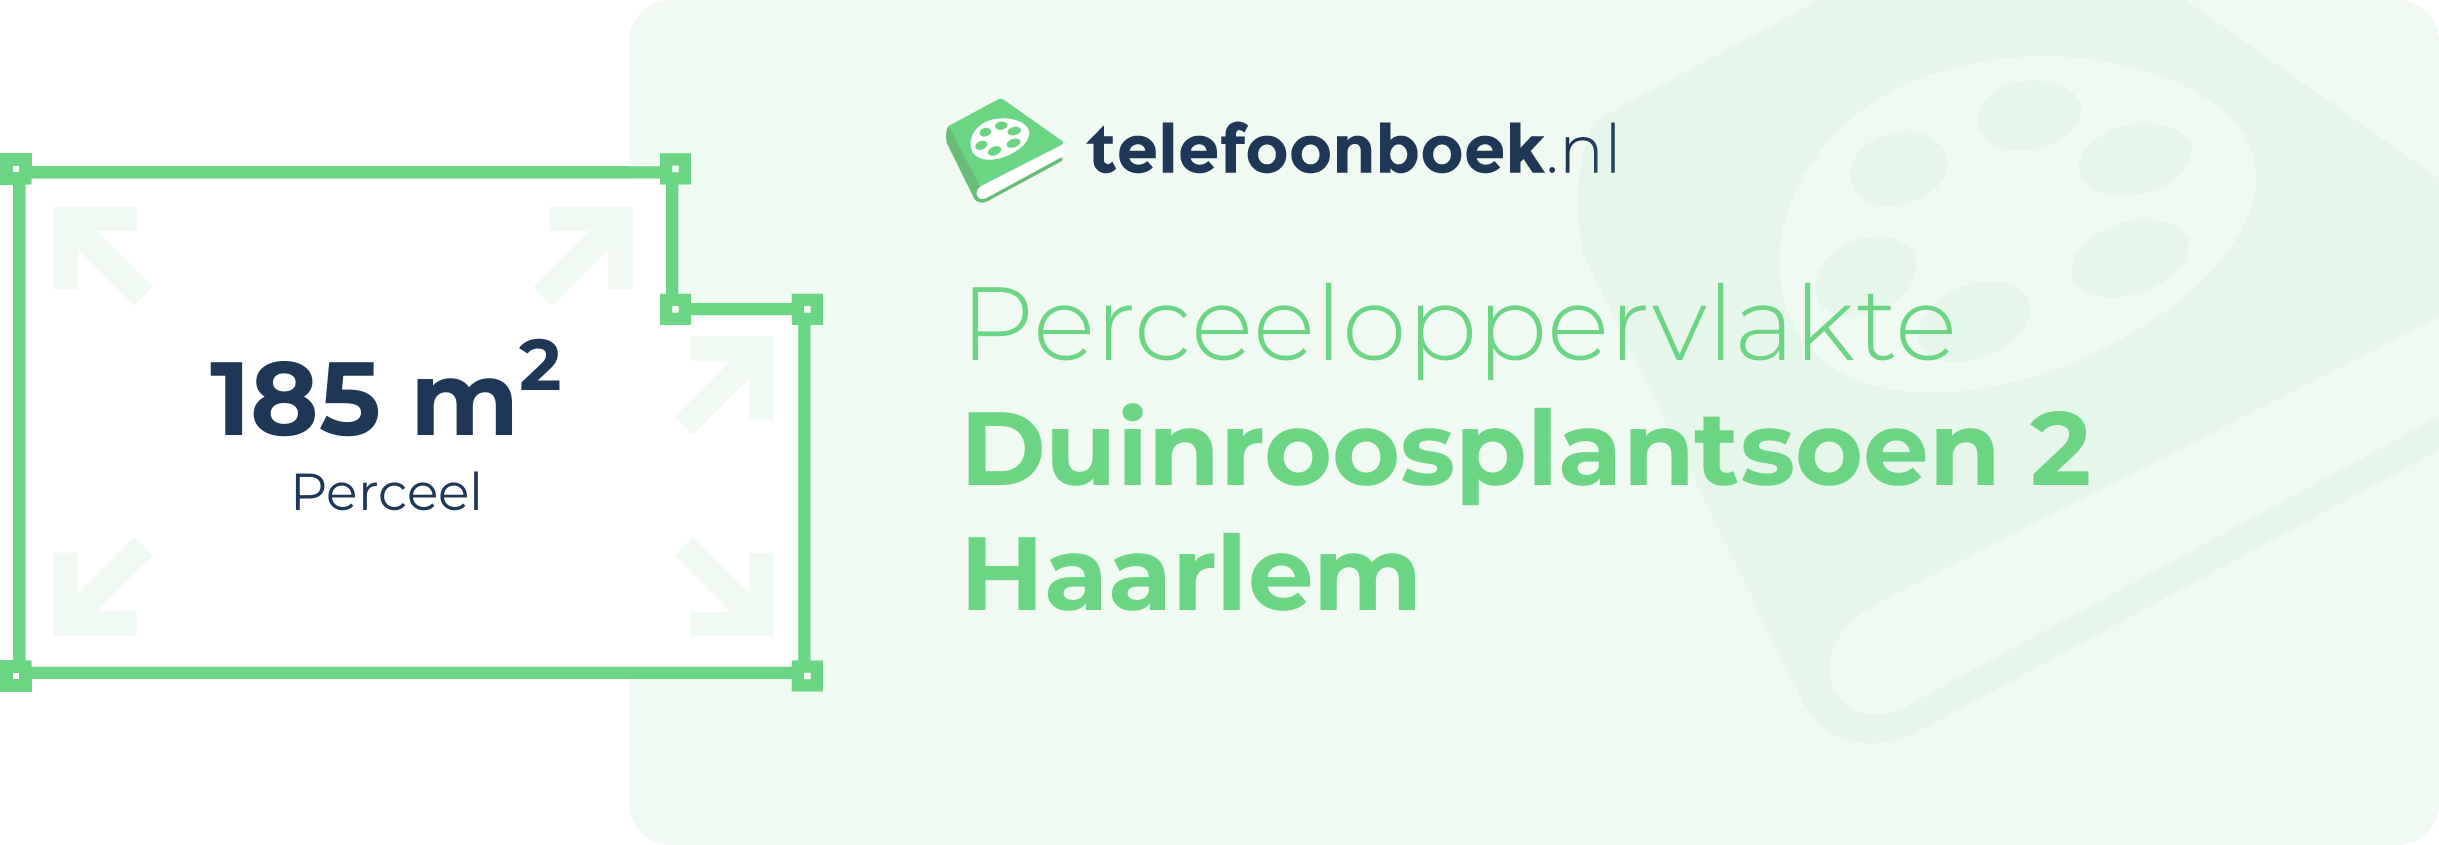 Perceeloppervlakte Duinroosplantsoen 2 Haarlem